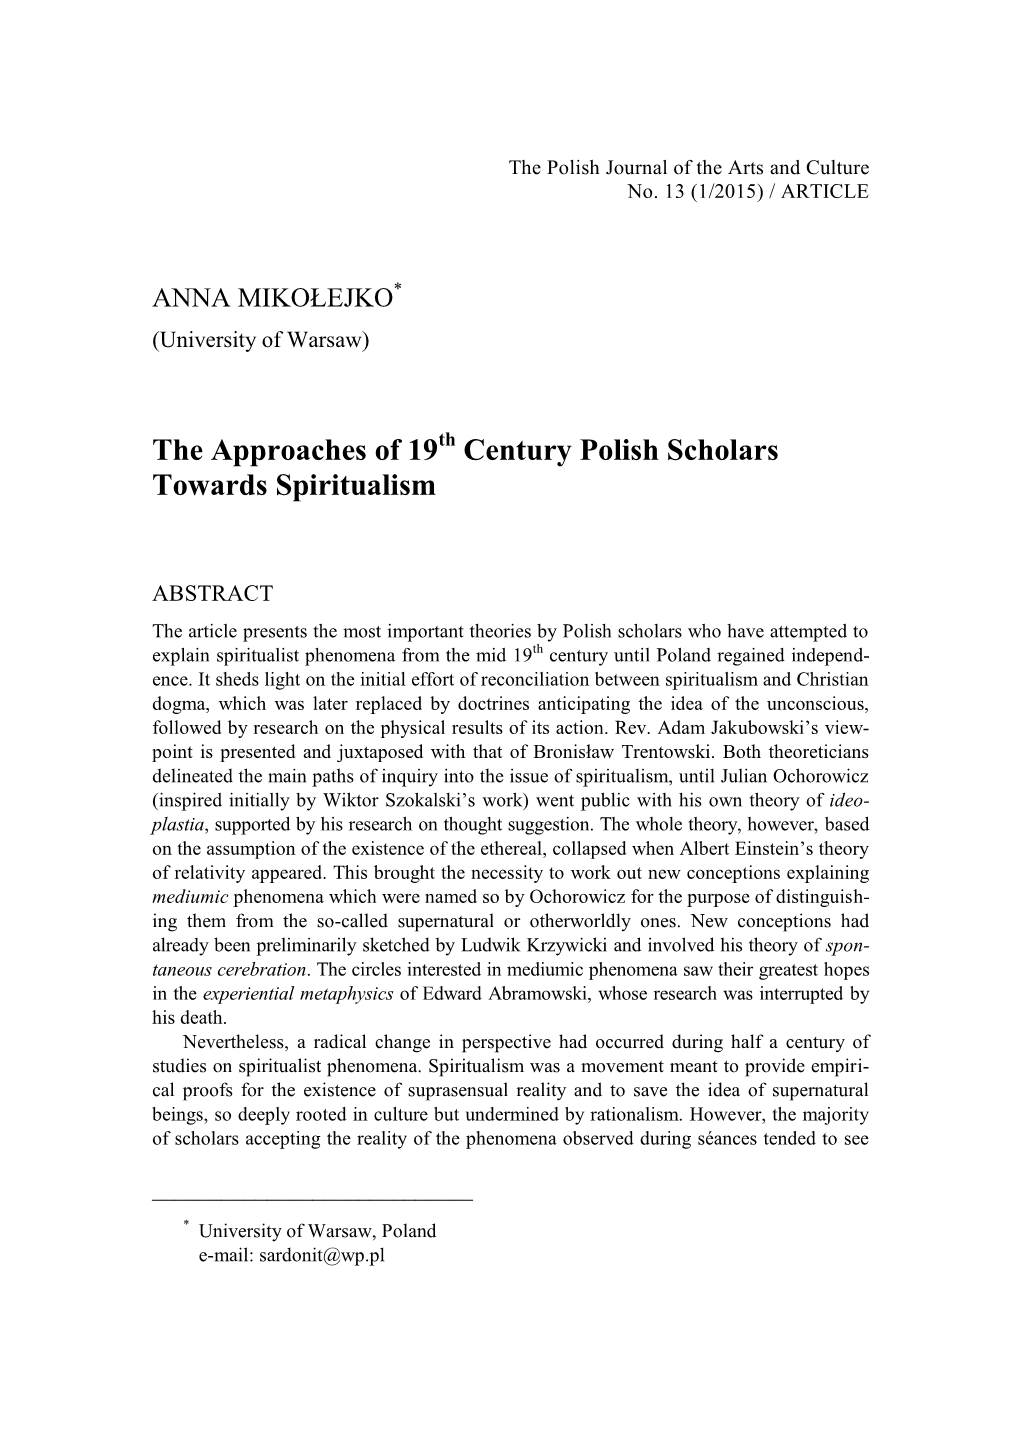 The Approaches of 19 Century Polish Scholars Towards Spiritualism